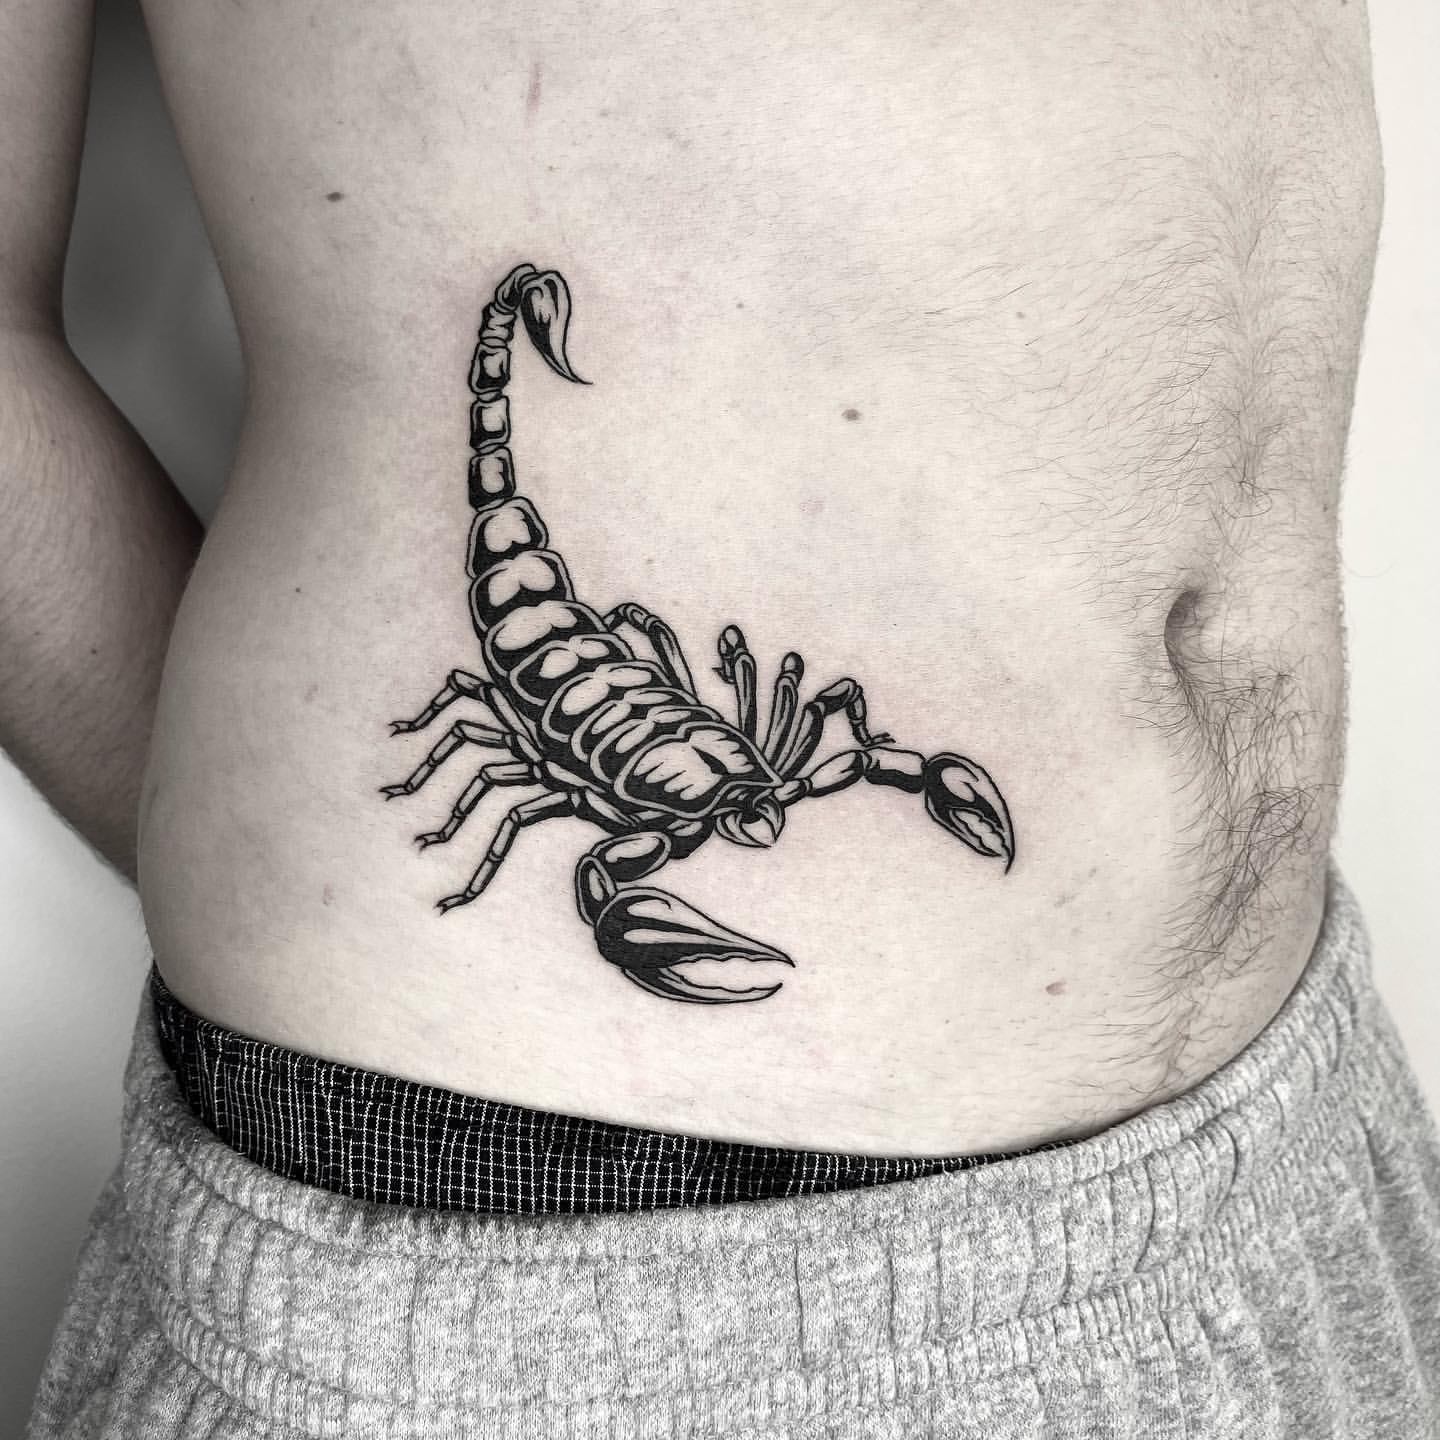 Tattoos of scorpions